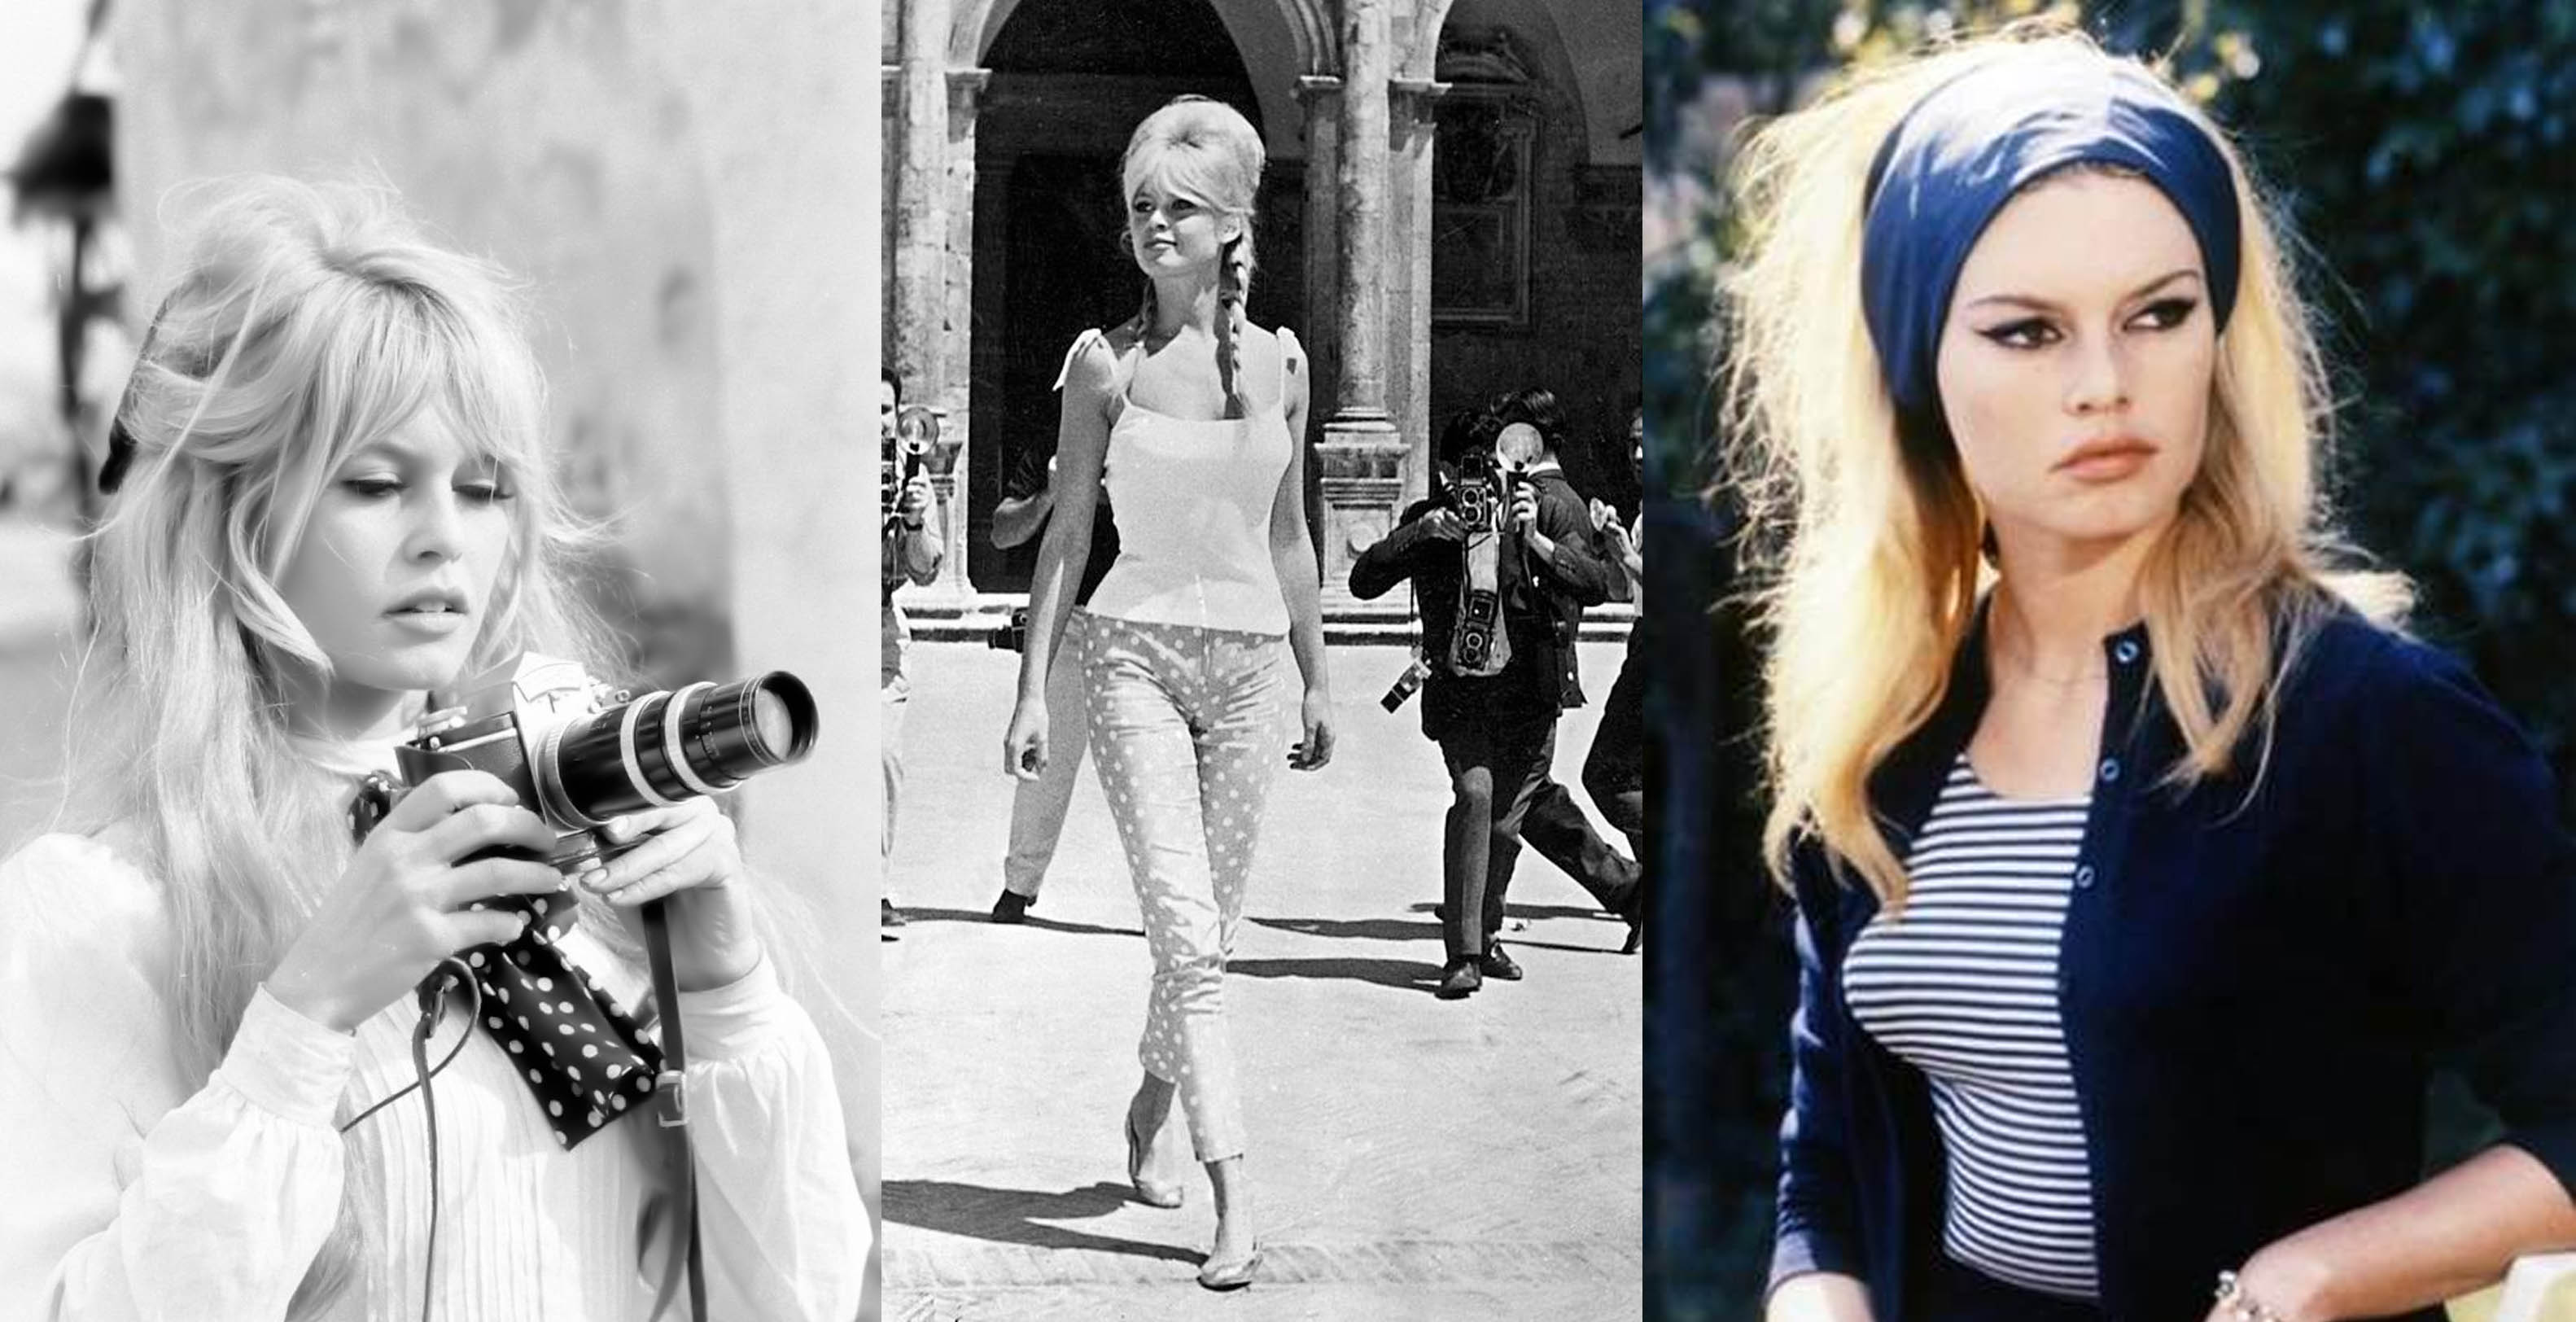 60s Fashions Stick Around - The Boomer Look